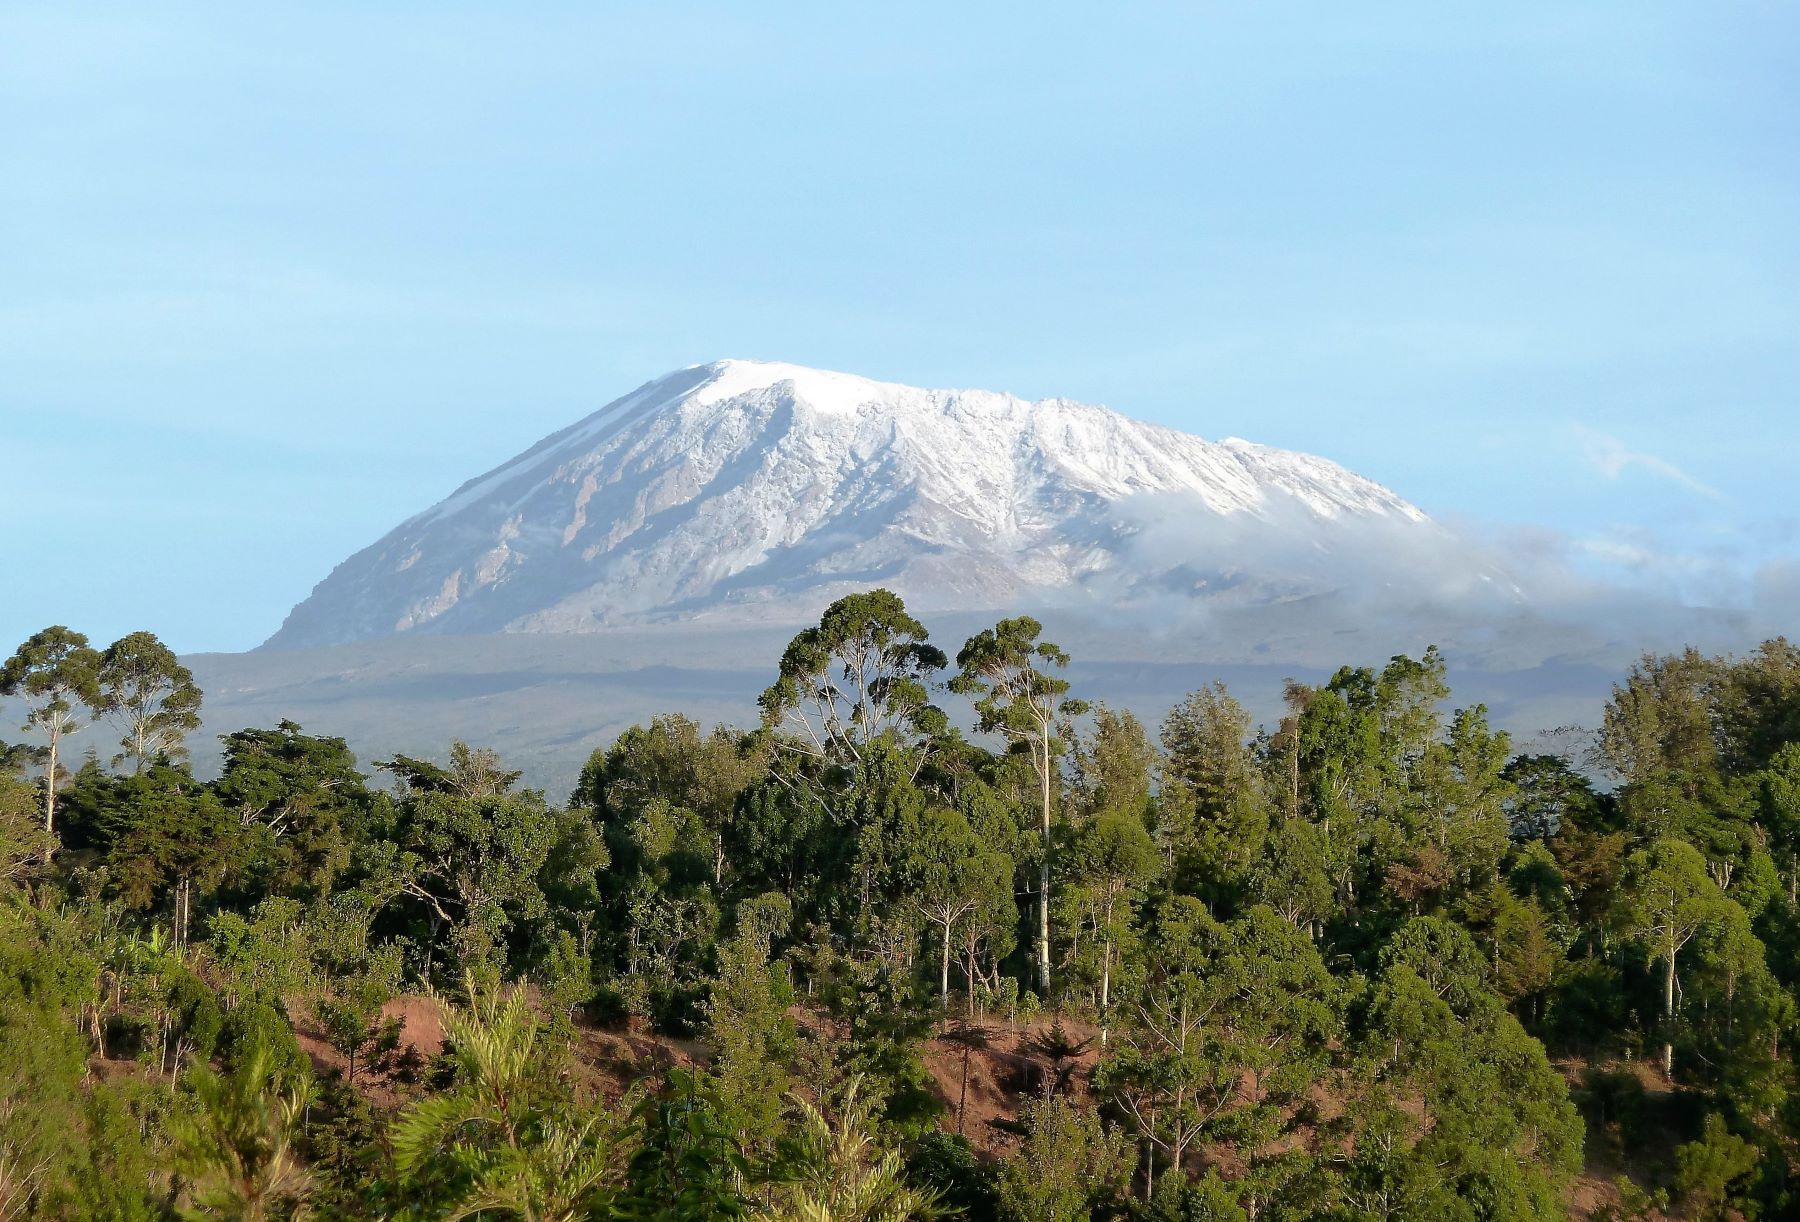 Scenic Mount Kilimanjaro